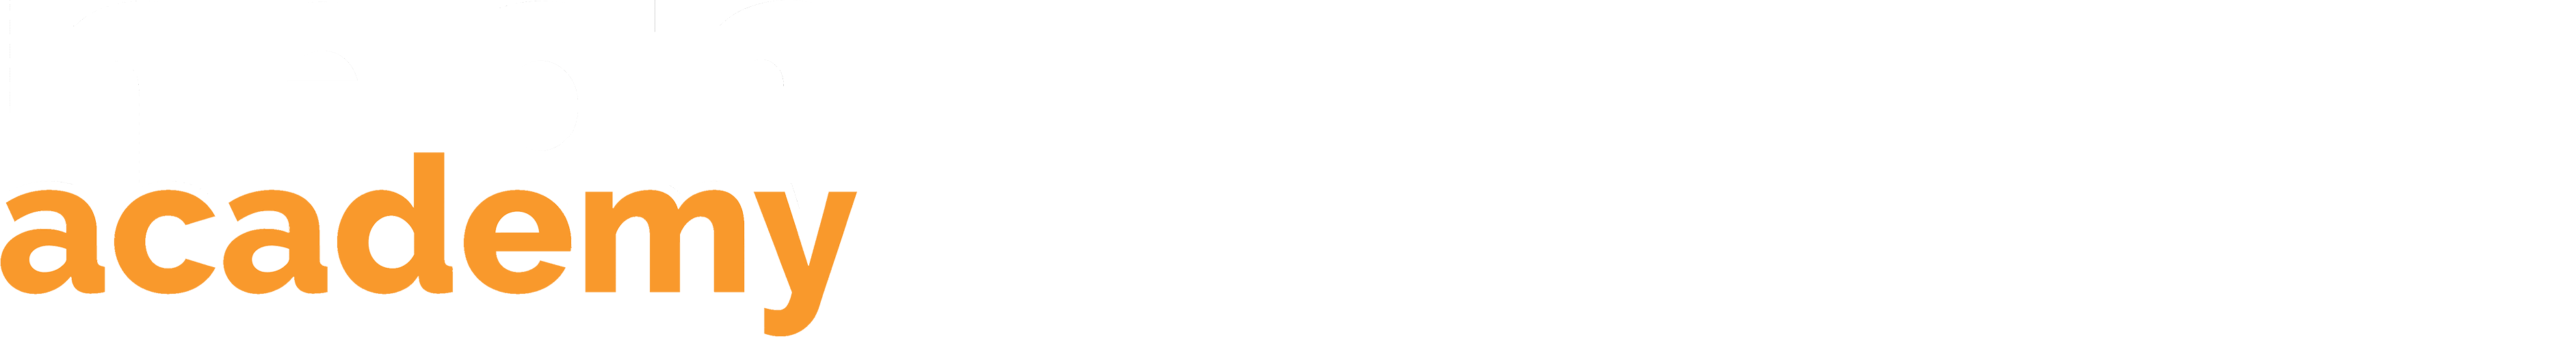 neon academy logo